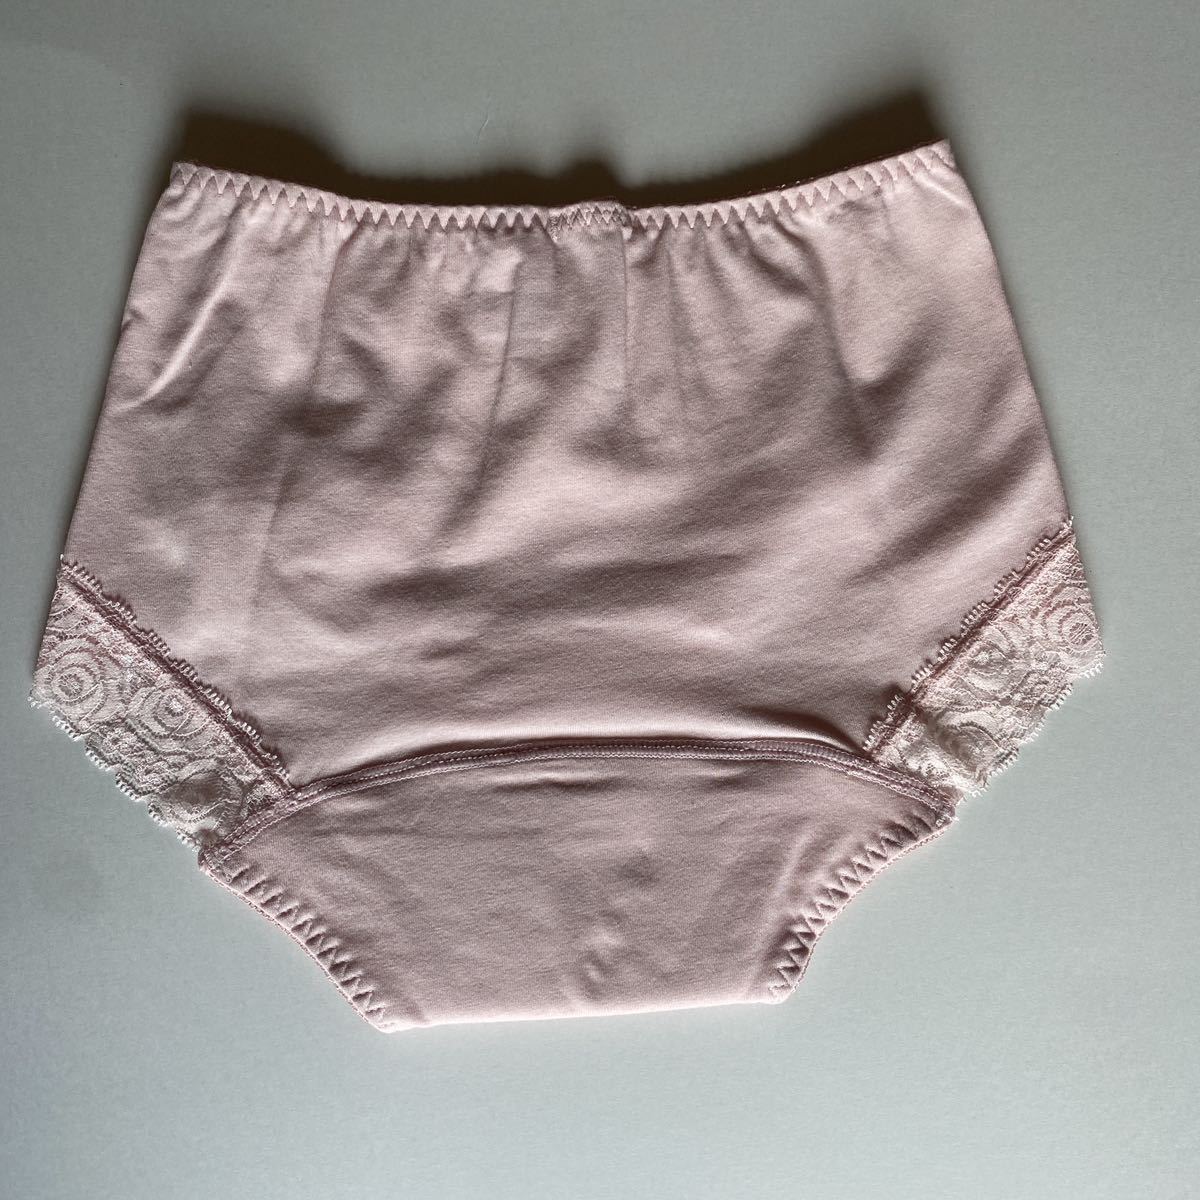 6 sheets set L size incontinence pants 20cc. prohibitation shorts light . prohibitation safety shorts for women incontinence lady's for lady 